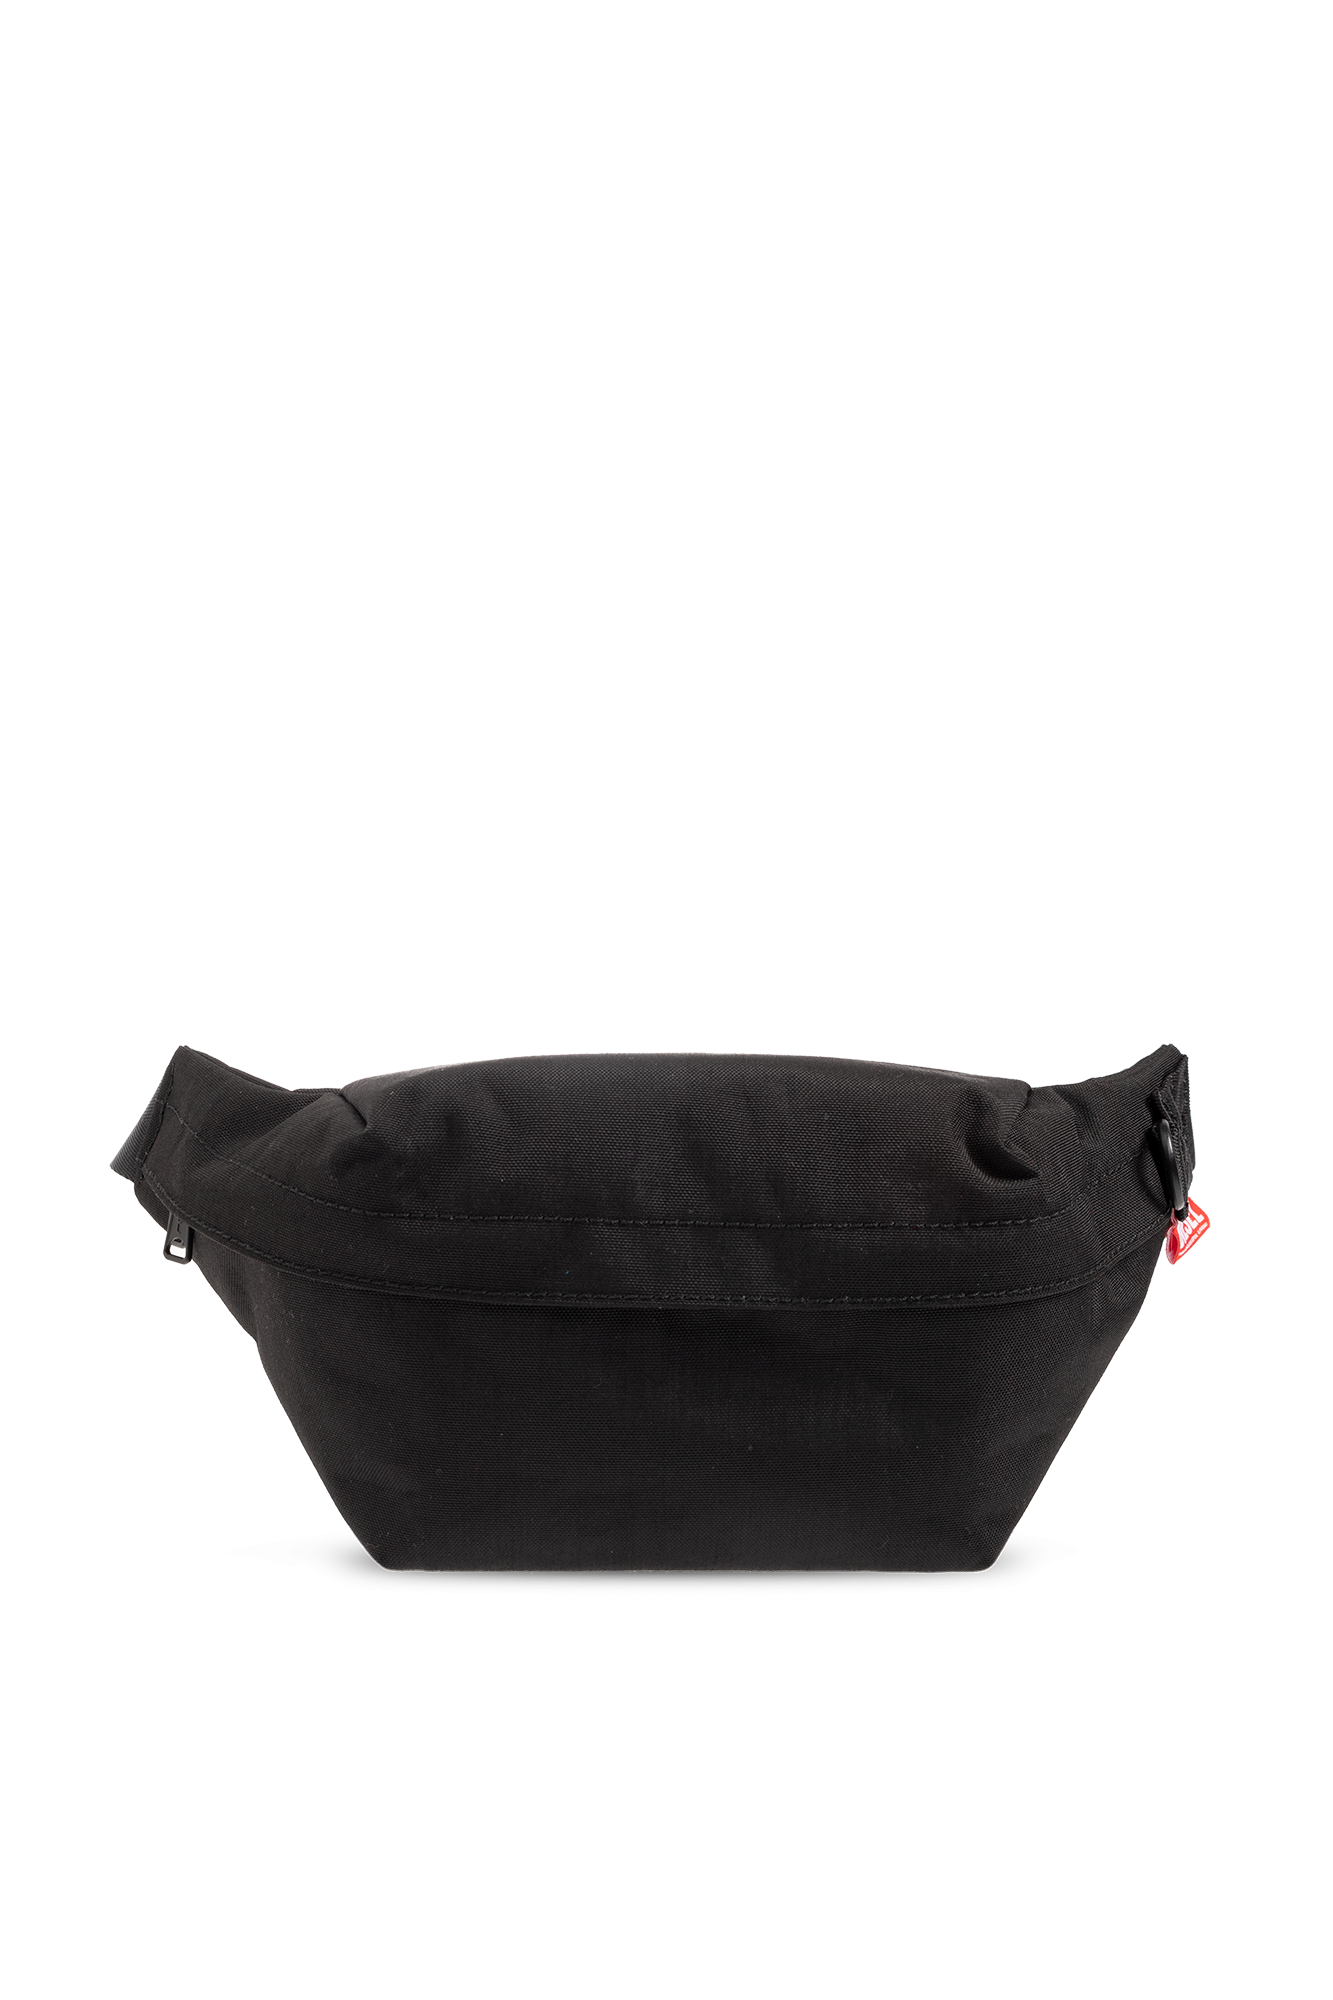 Belt Bag Men/women, Leather Belt Bag, Black Fanny Pack, Belt Bag Hip Pouch, Waist  Bag, Bum Bag -  Canada